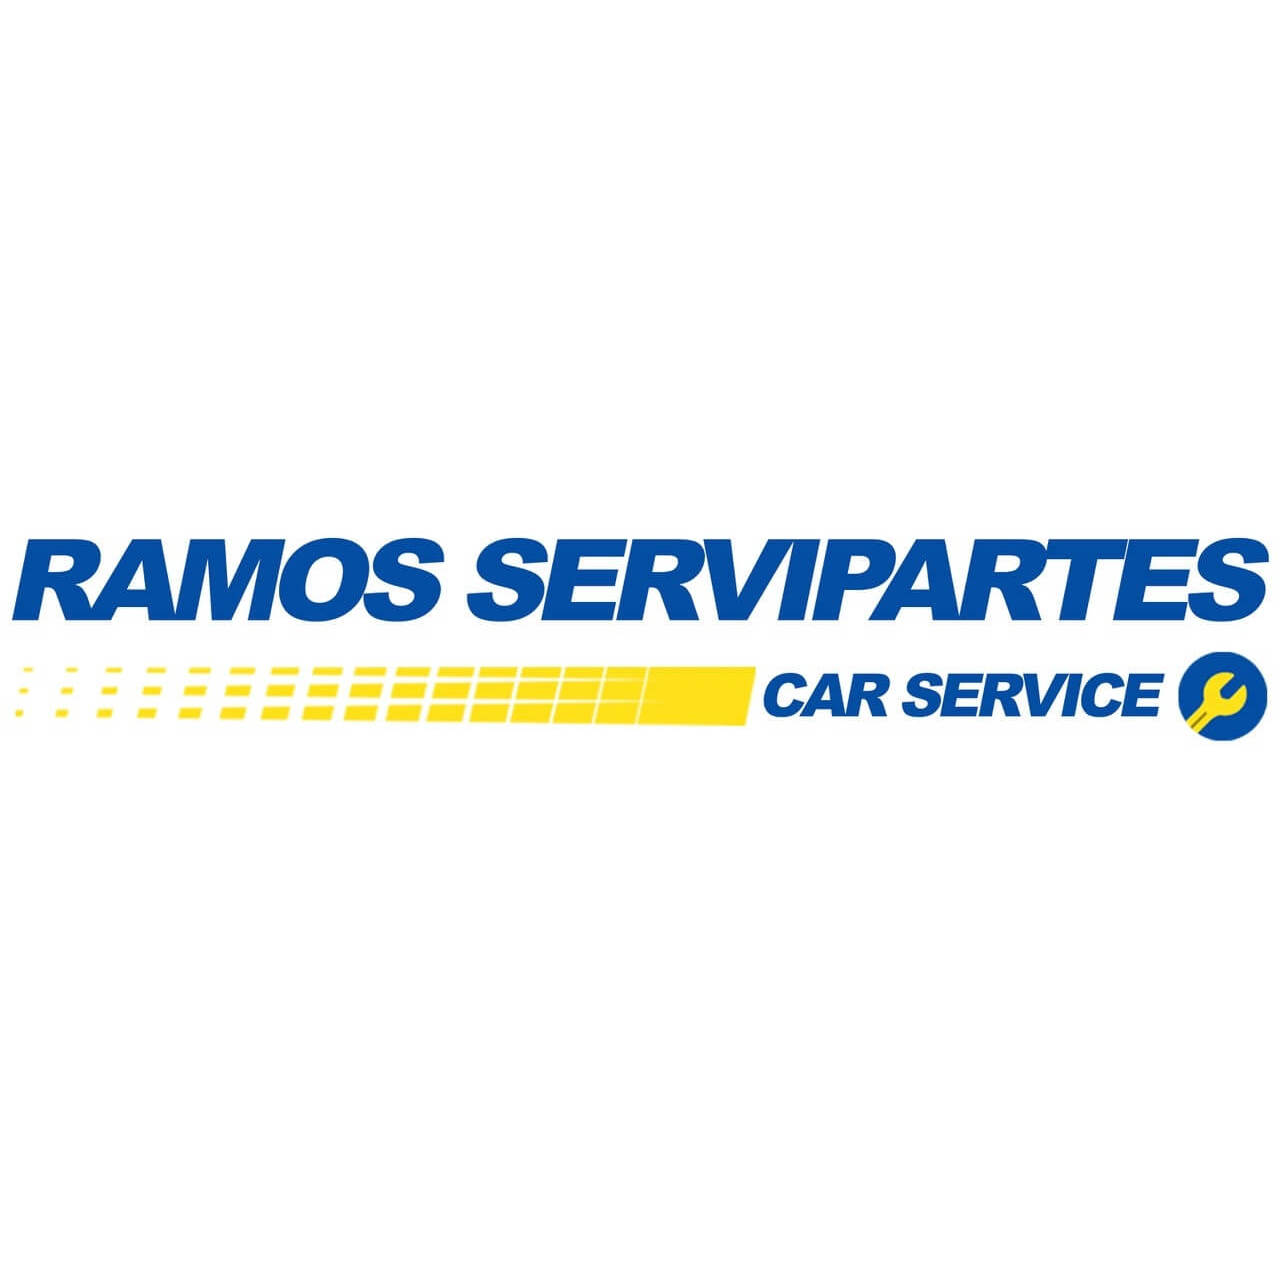 Ramos Servipartes Car Service Landa de Matamoros La Lagunita Logo